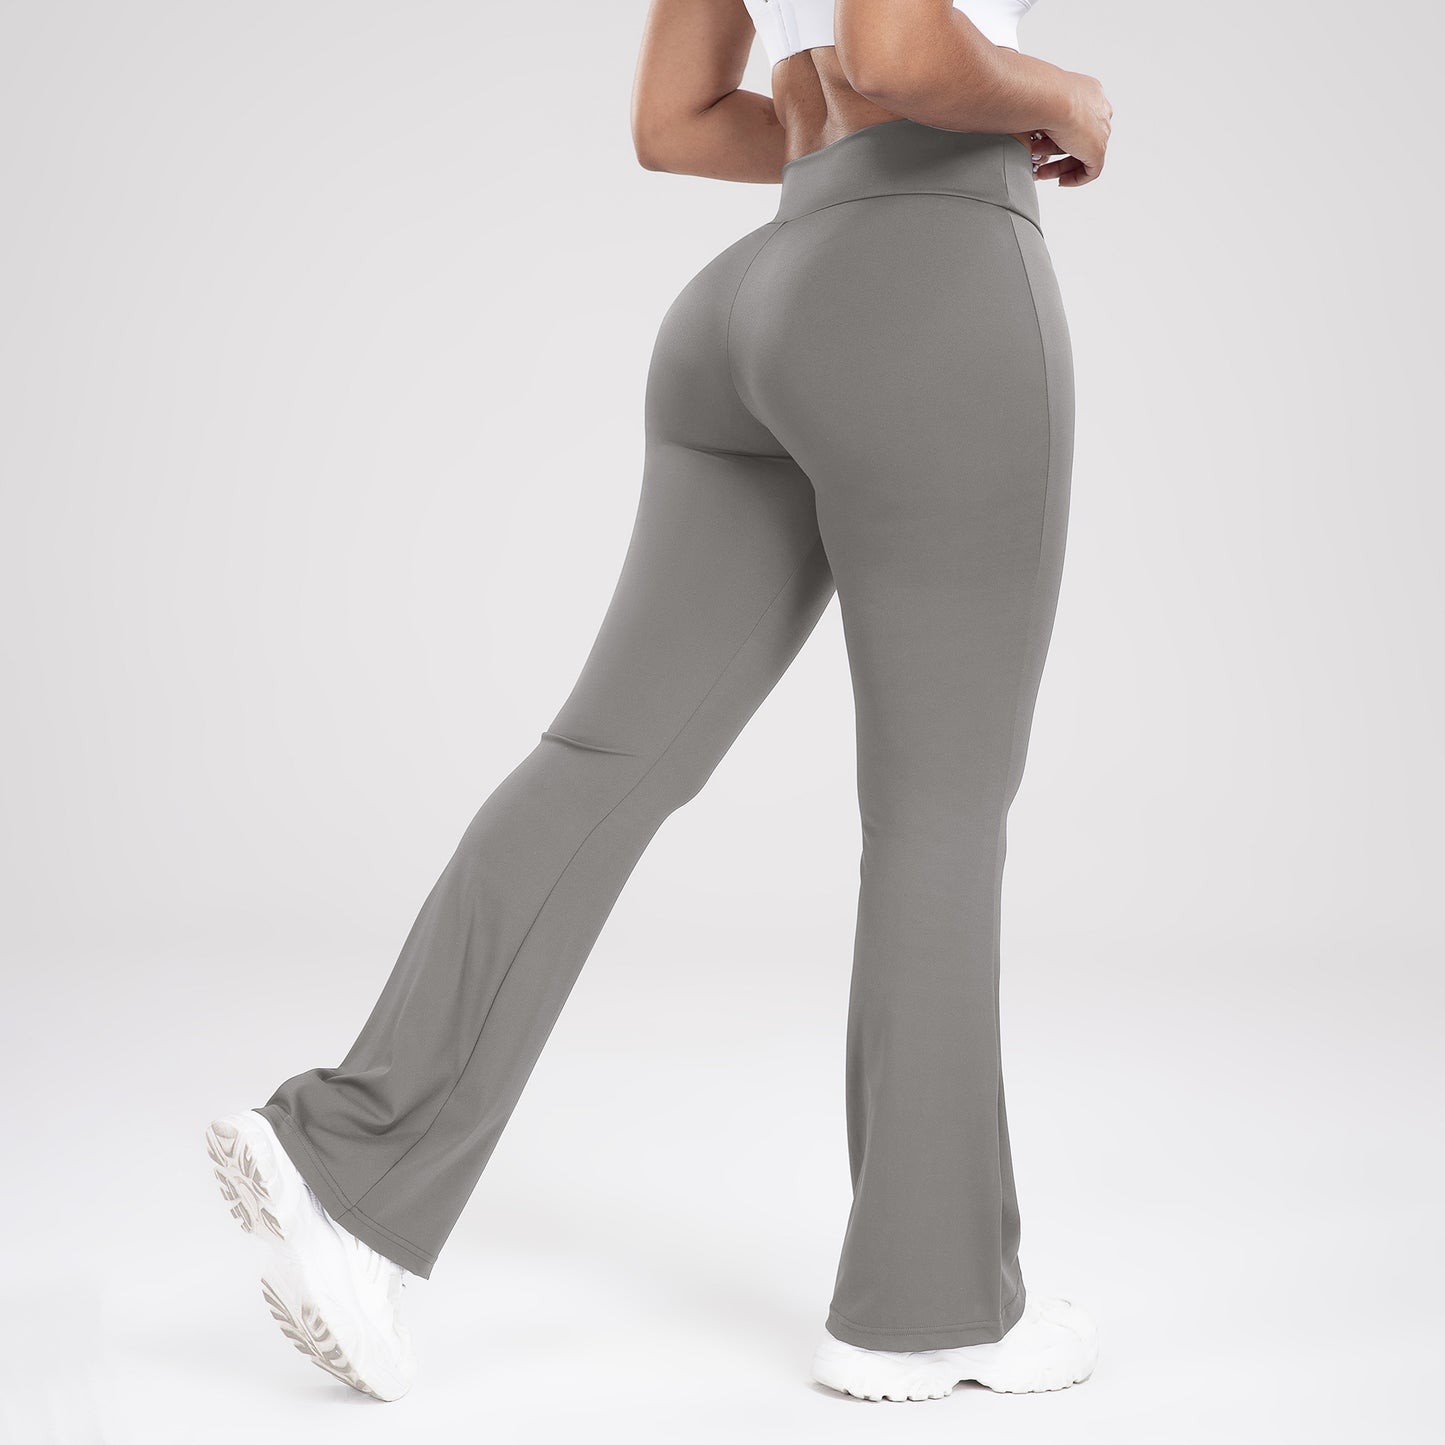 Global Fashion Leisure Sports Bell-bottom Pants Slim Fit Yoga Pants Women